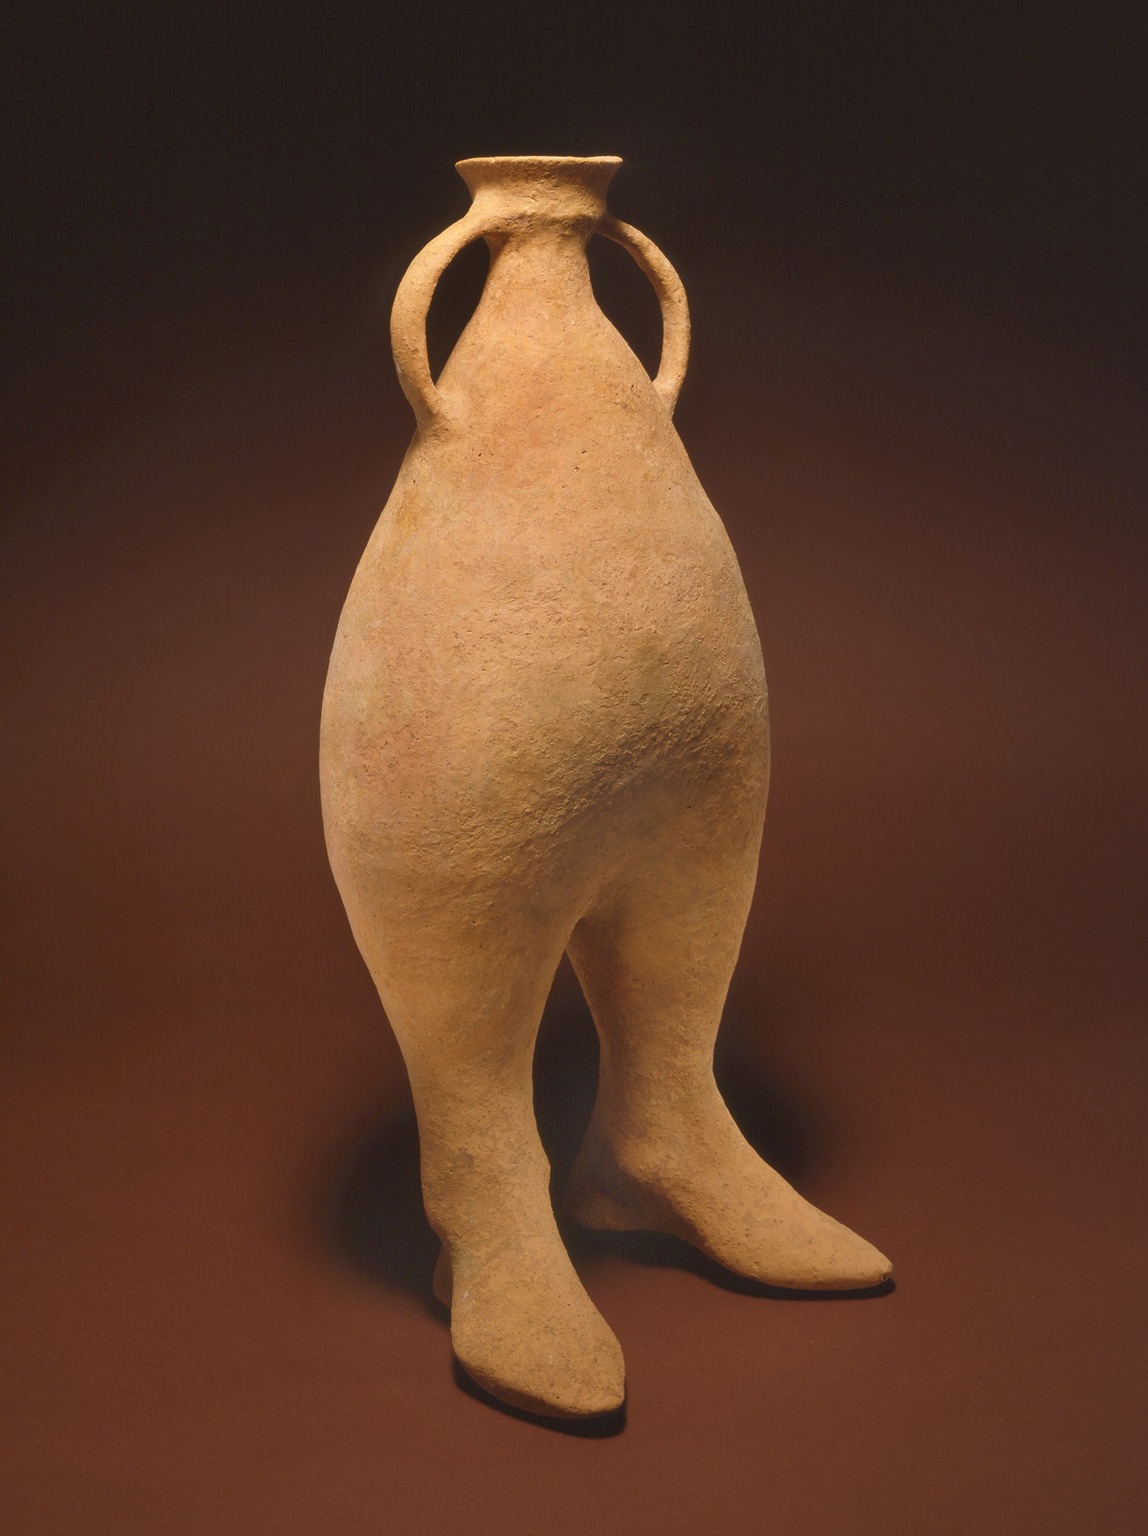 Vasija con dos pies by Artista anónimo  - ca. 1000-800 a.e.c. - 48 x 19,5 cm Museo Brooklyn